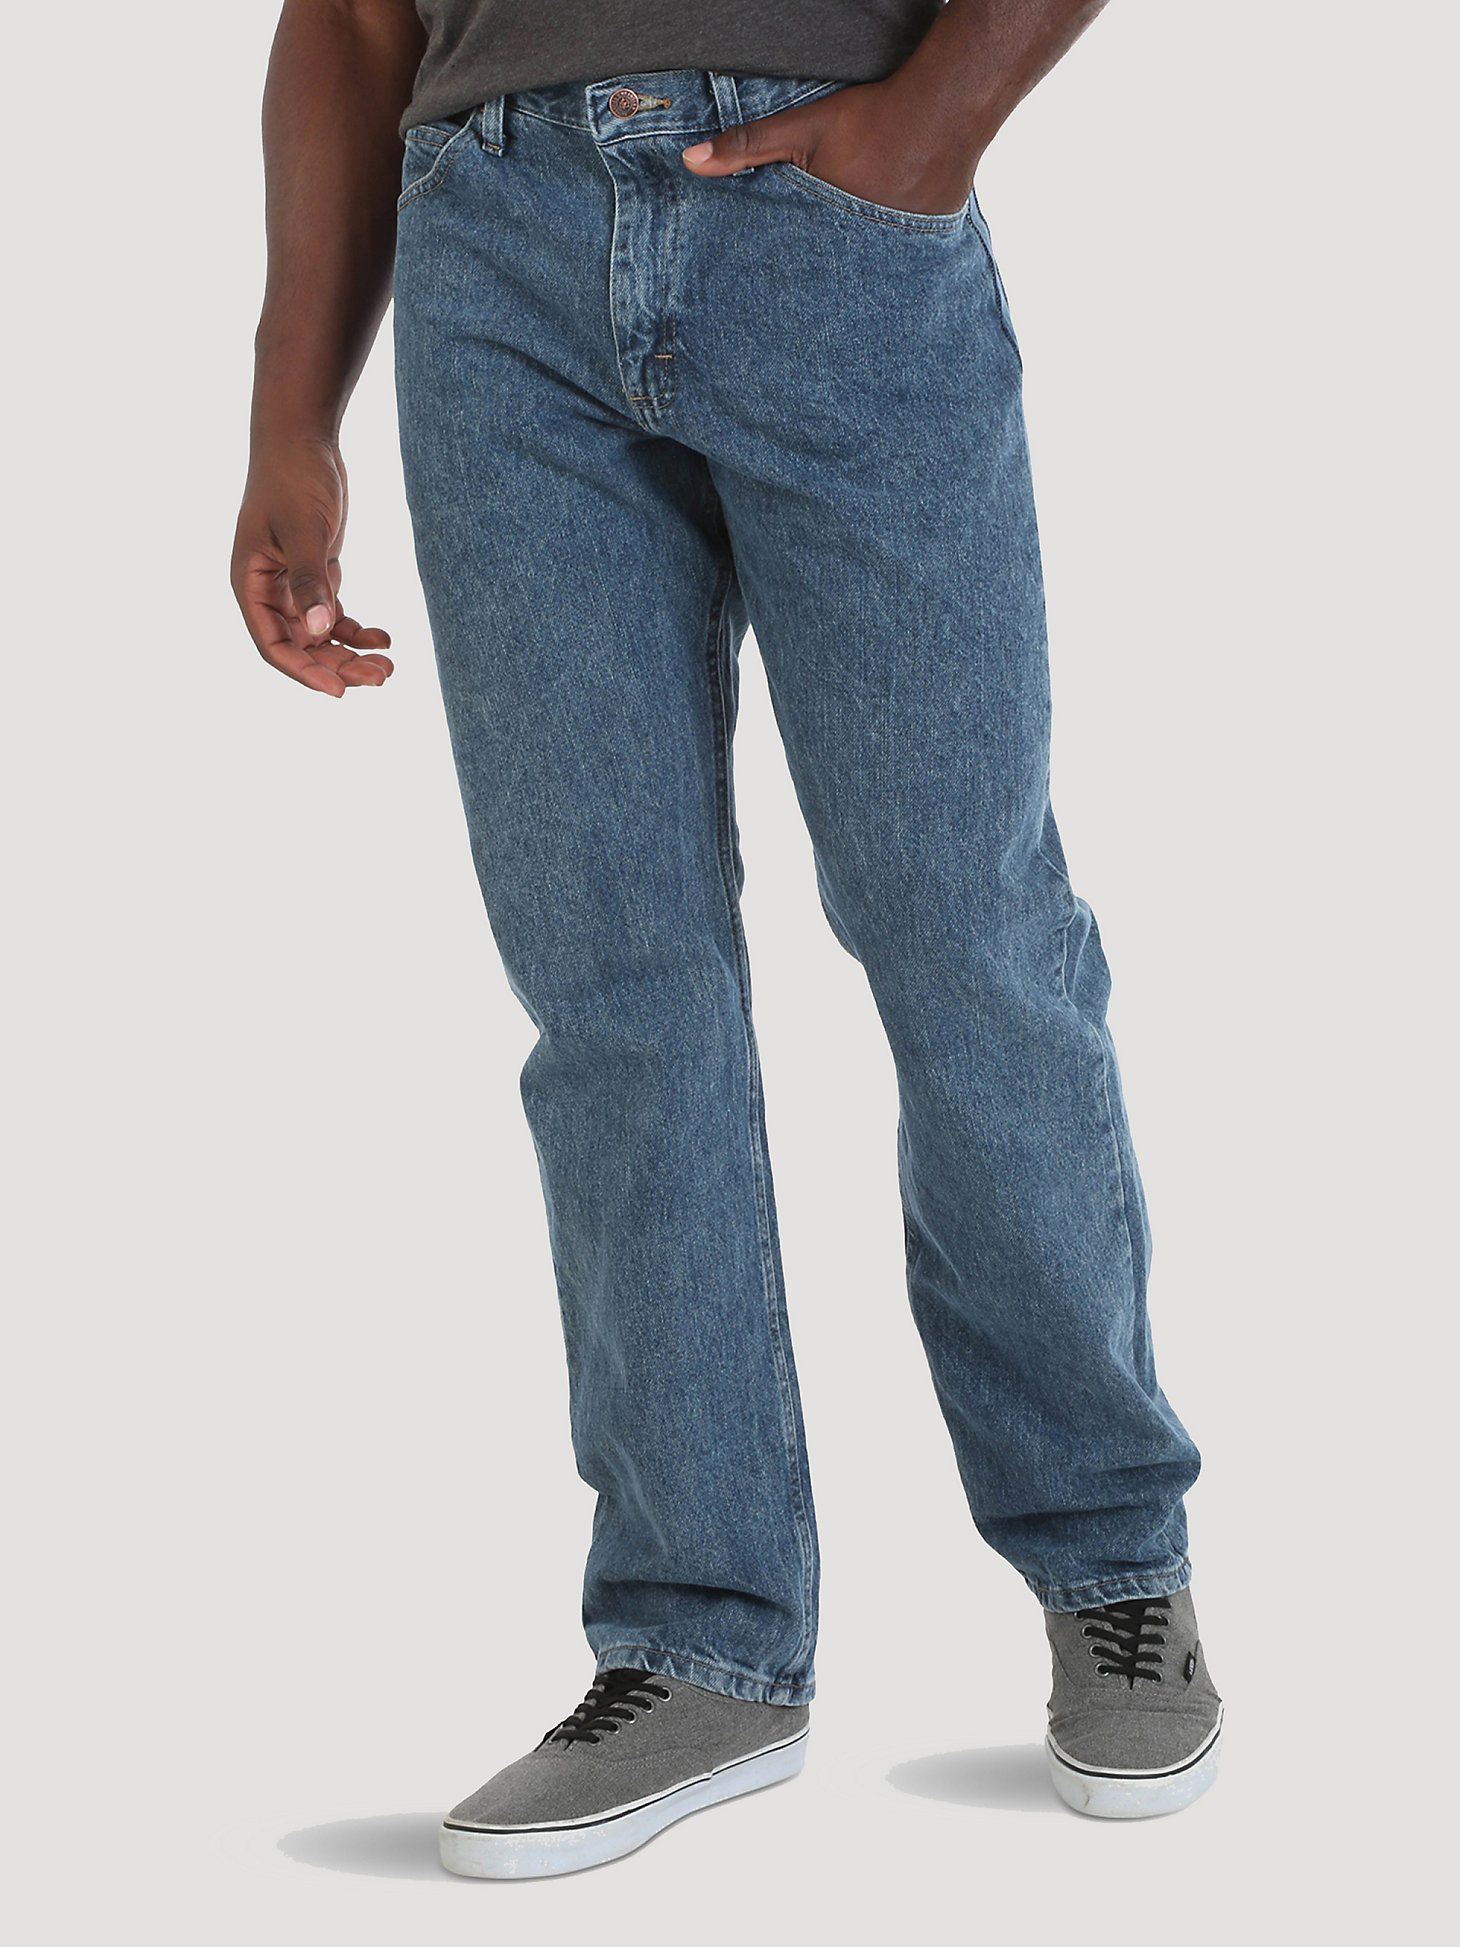 Wrangler Mens Classic 5-Pocket Regular Fit Cotton Jean 